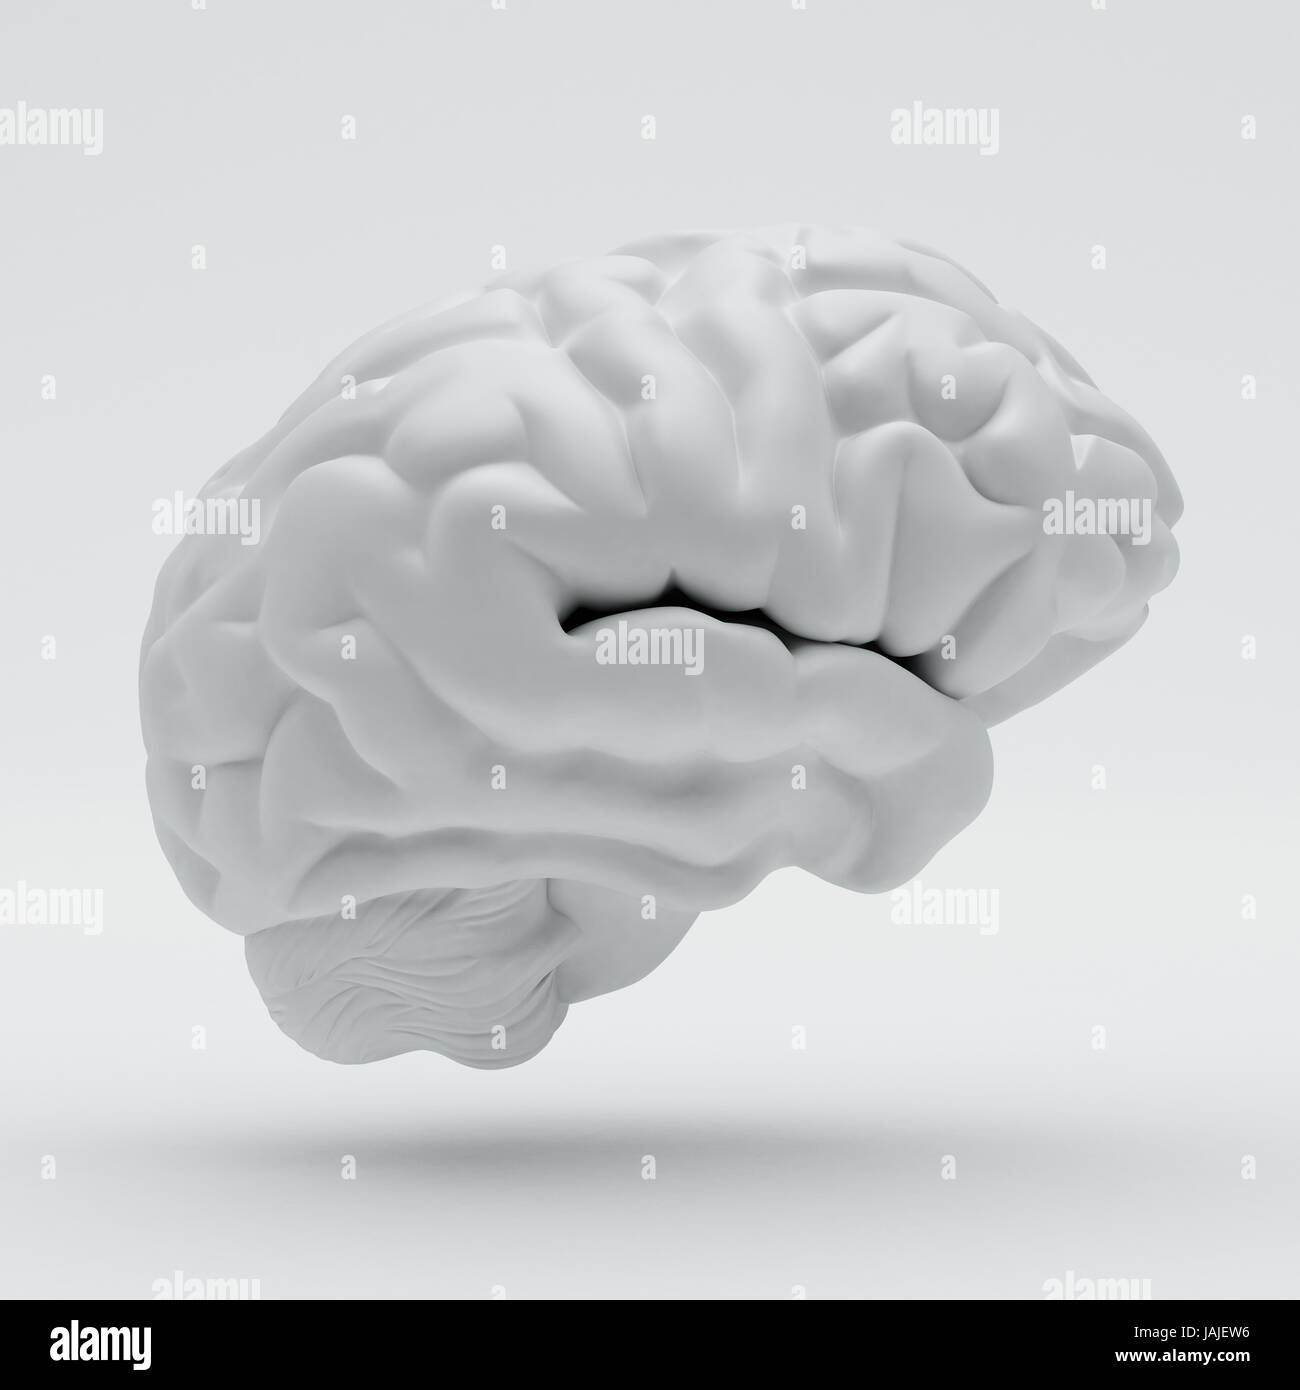 Brain isolated on white background Stock Photo